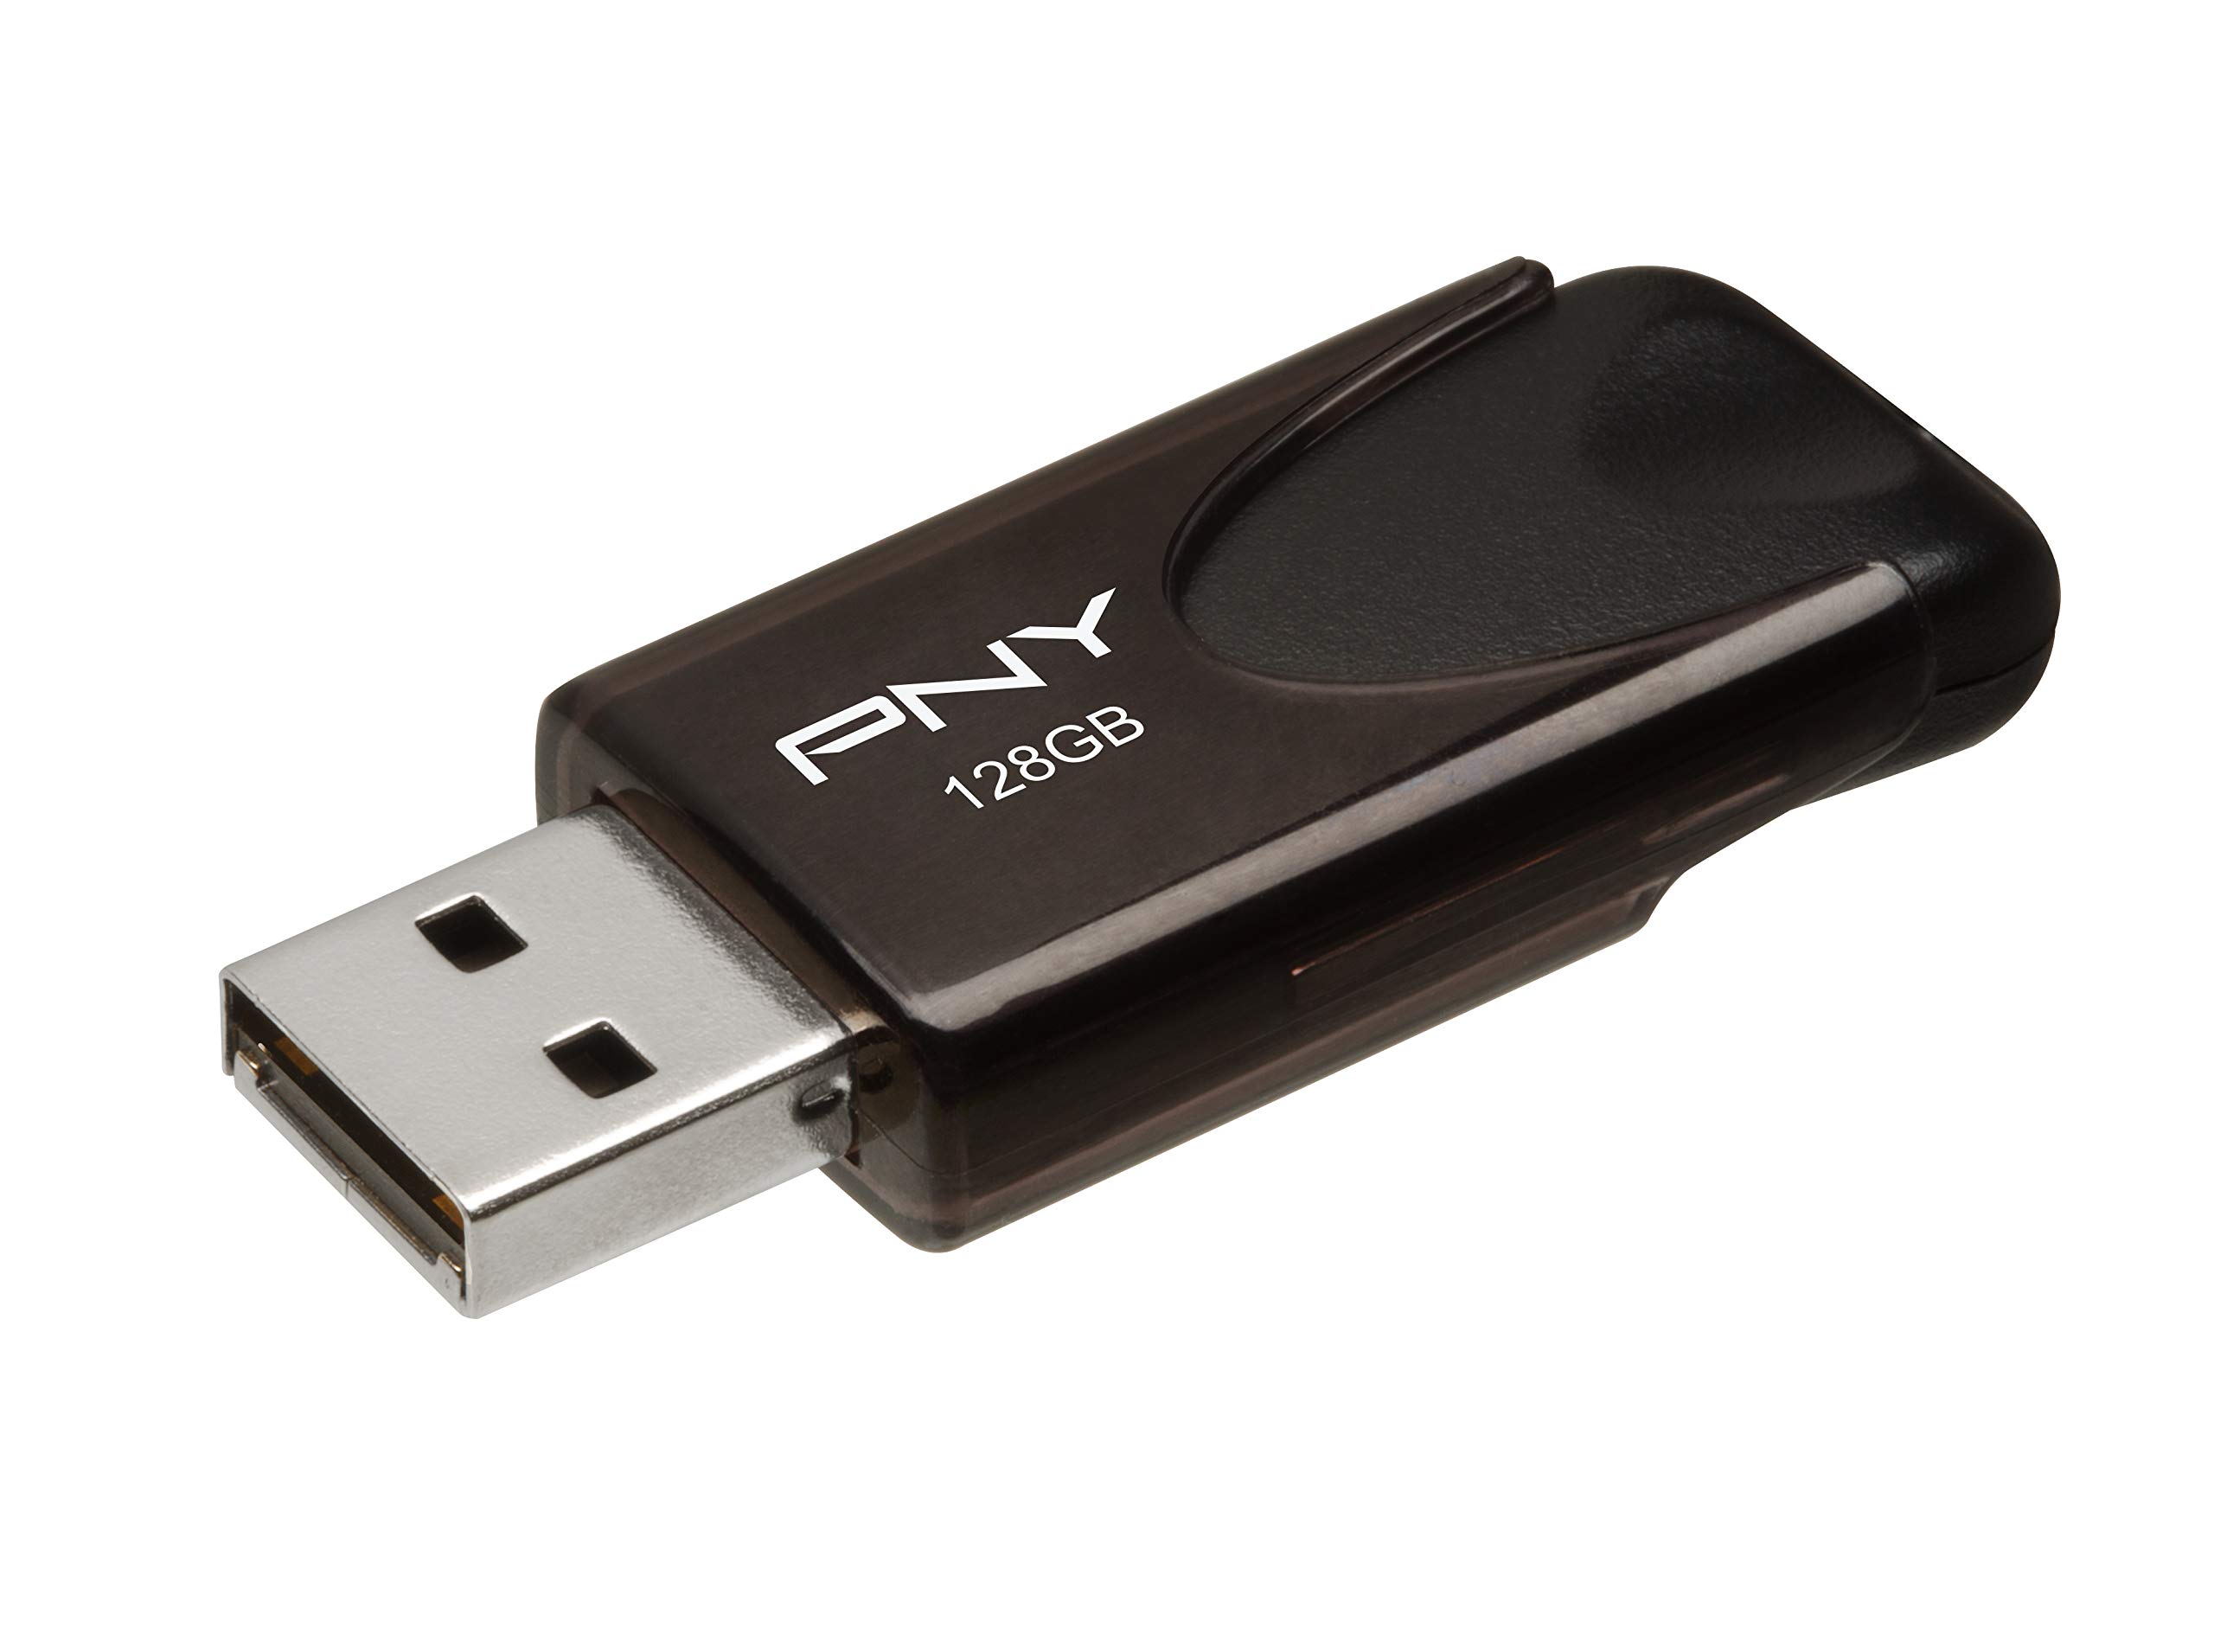 PNY 128GB Attaché 4 USB 2.0 Flash Drive - Amazon $8.99